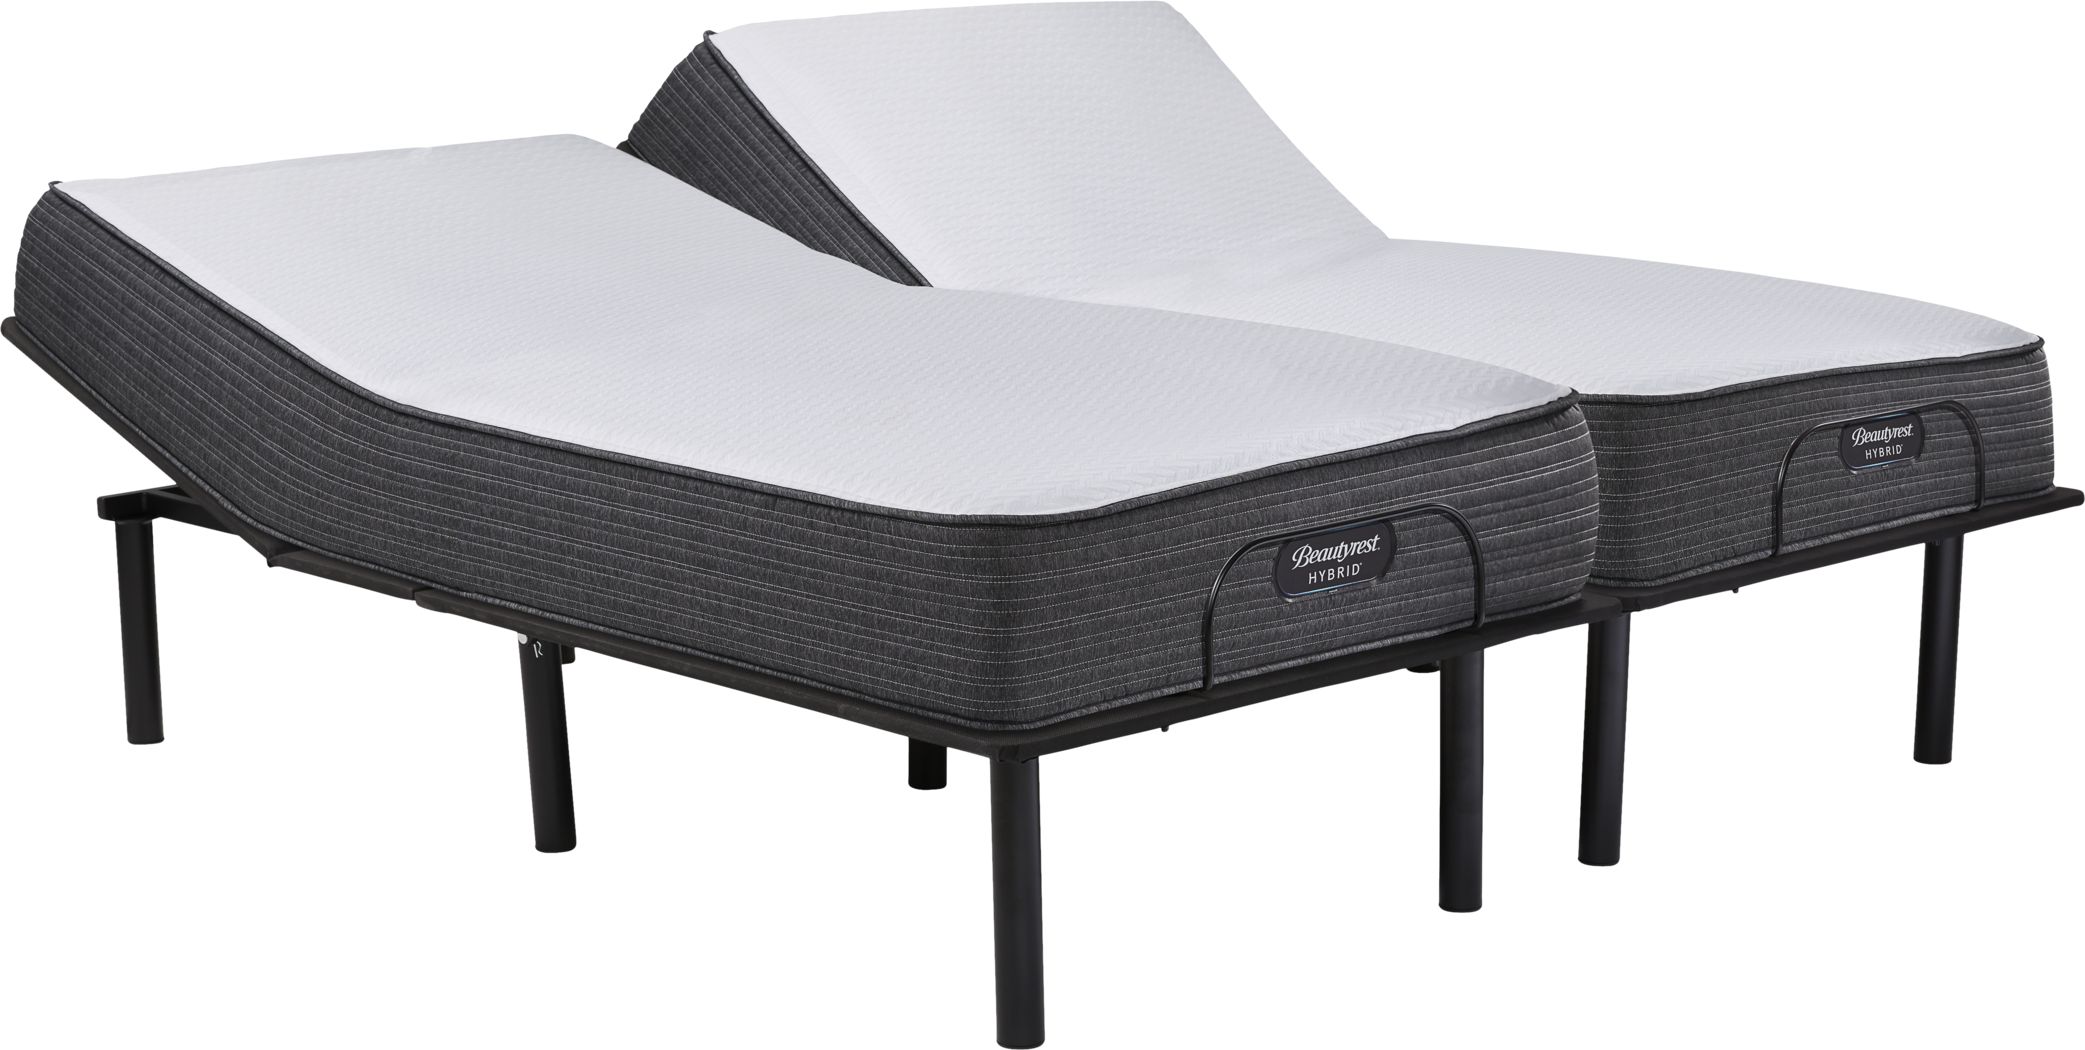 beautyrest hybrid mattress slat spacing